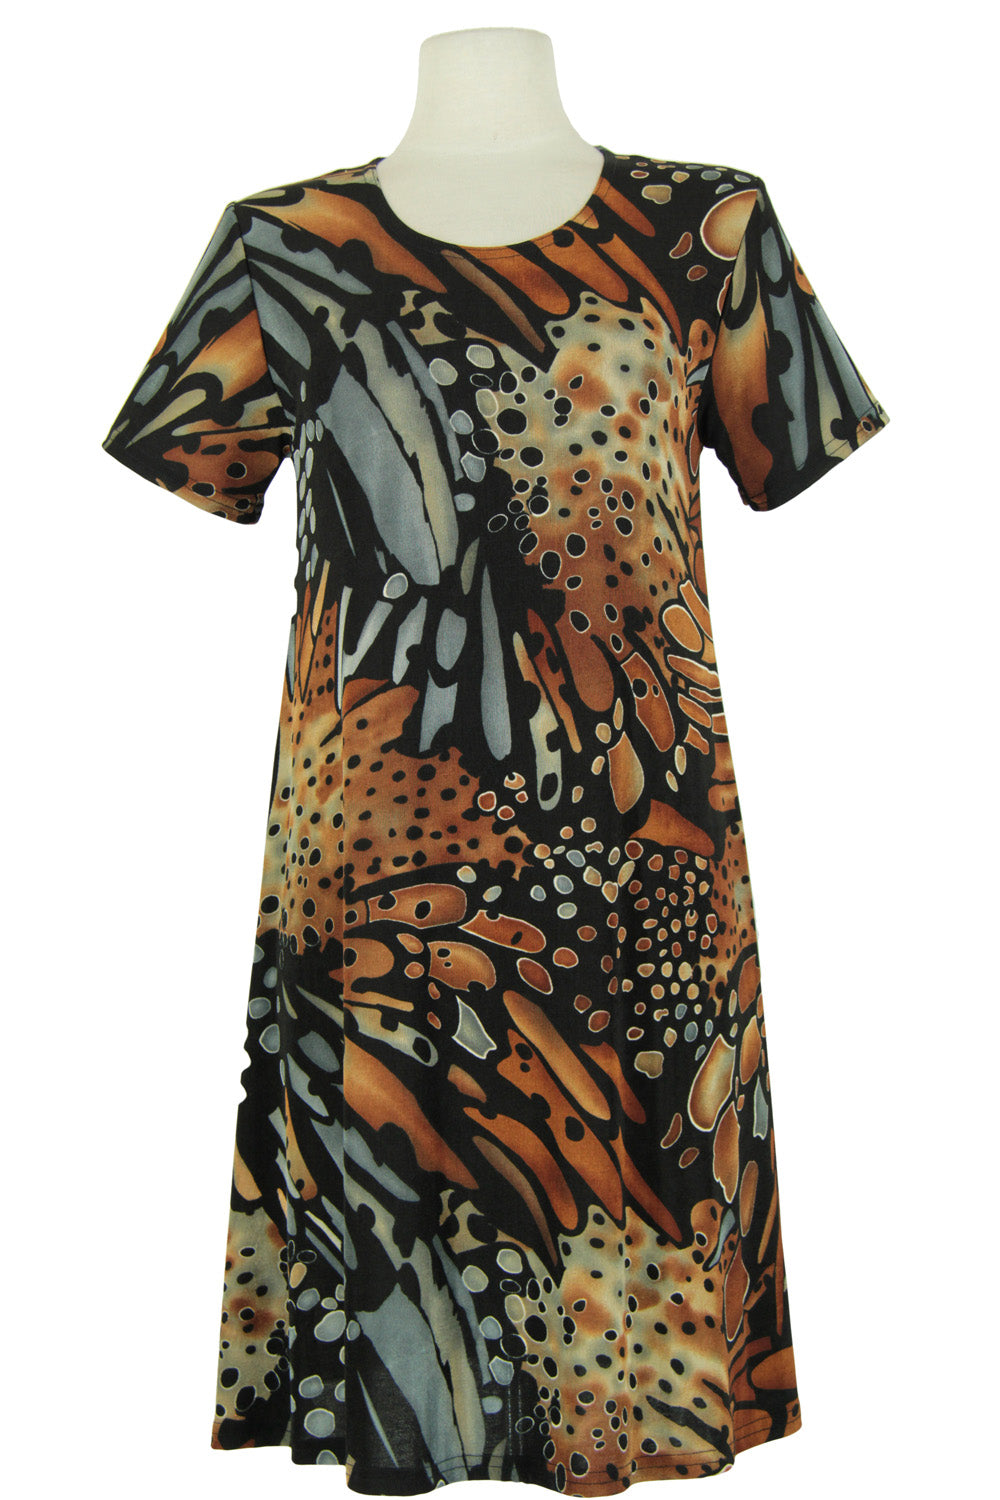 Jostar Women's Stretchy Missy Dress Short Sleeve Print, 704BN-SP-W207 - Jostar Online